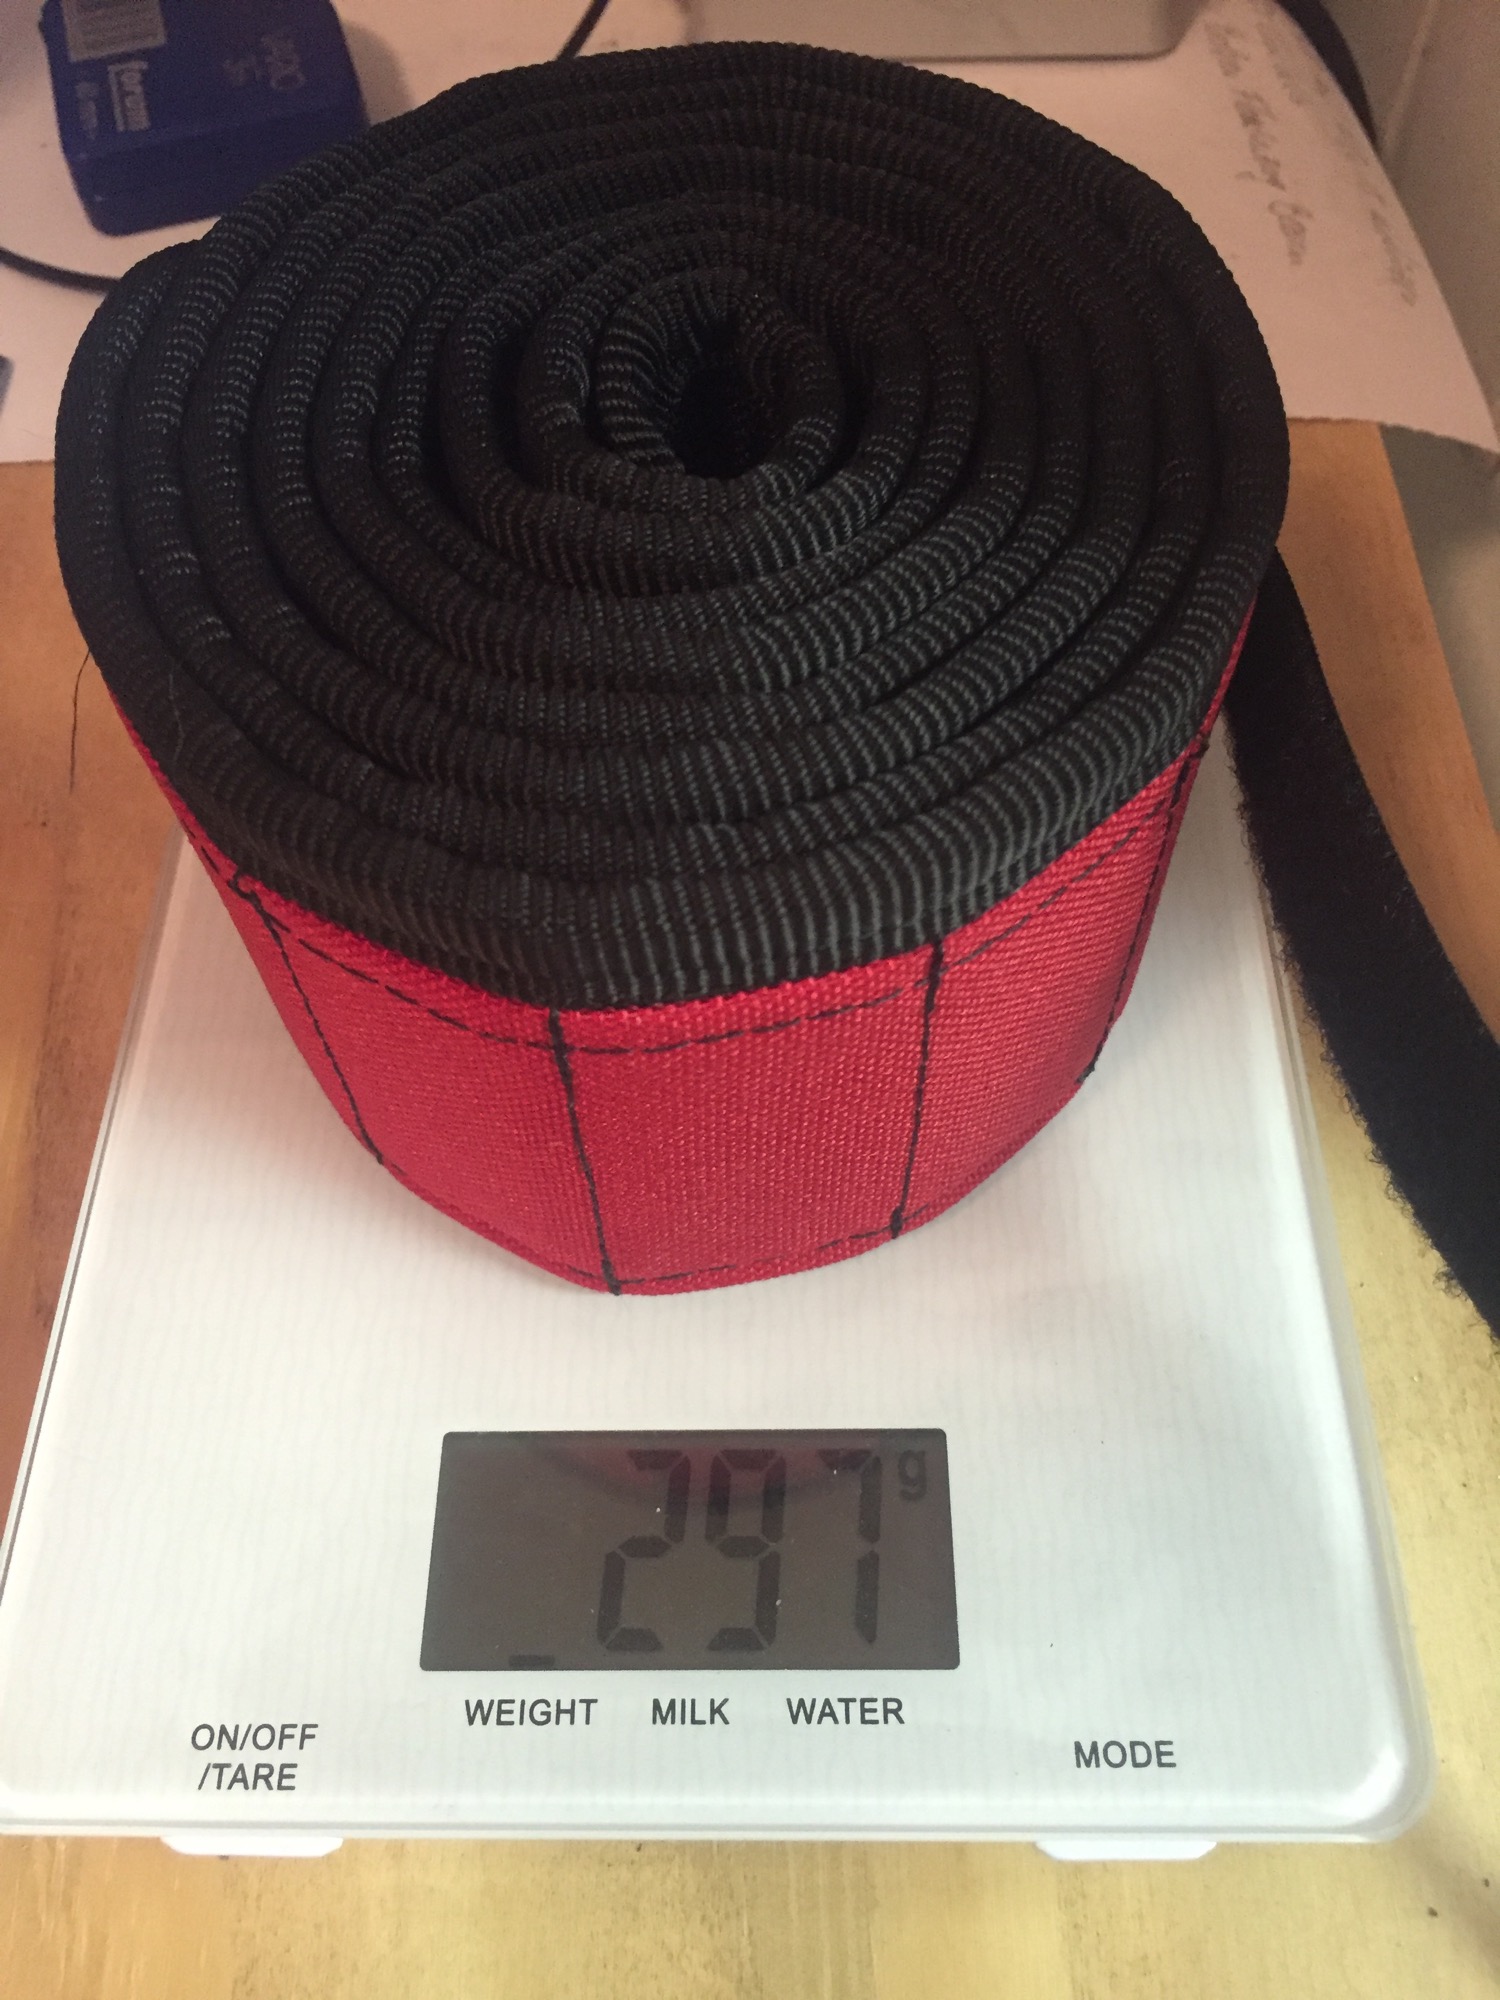 TreePRO weight: 297 grams